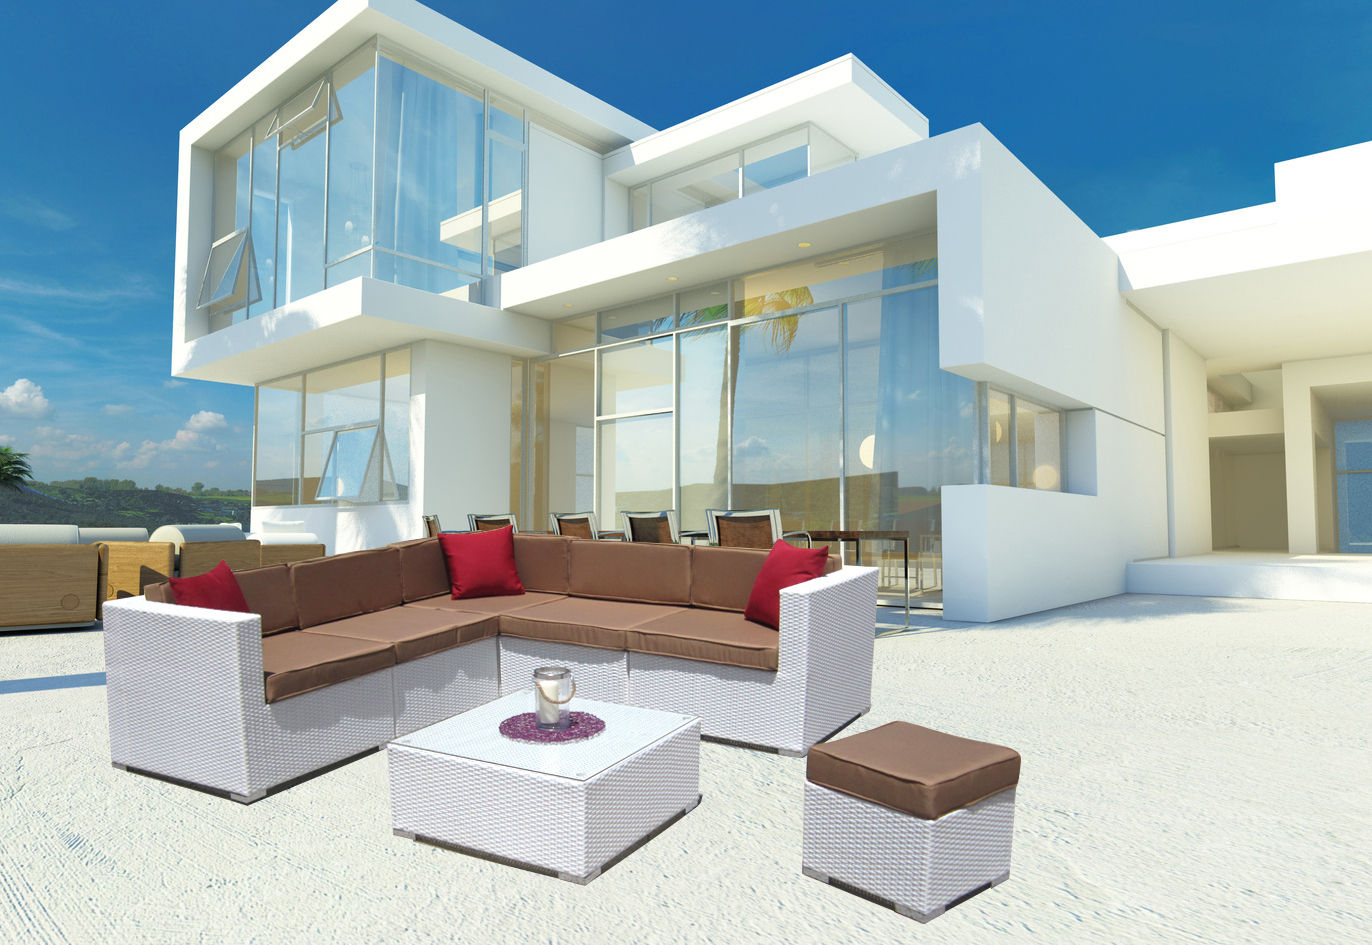 Arredo Giardino Rattan: Online su Luxurygarden.it, LuxuryGarden.it LuxuryGarden.it Modern terrace Furniture